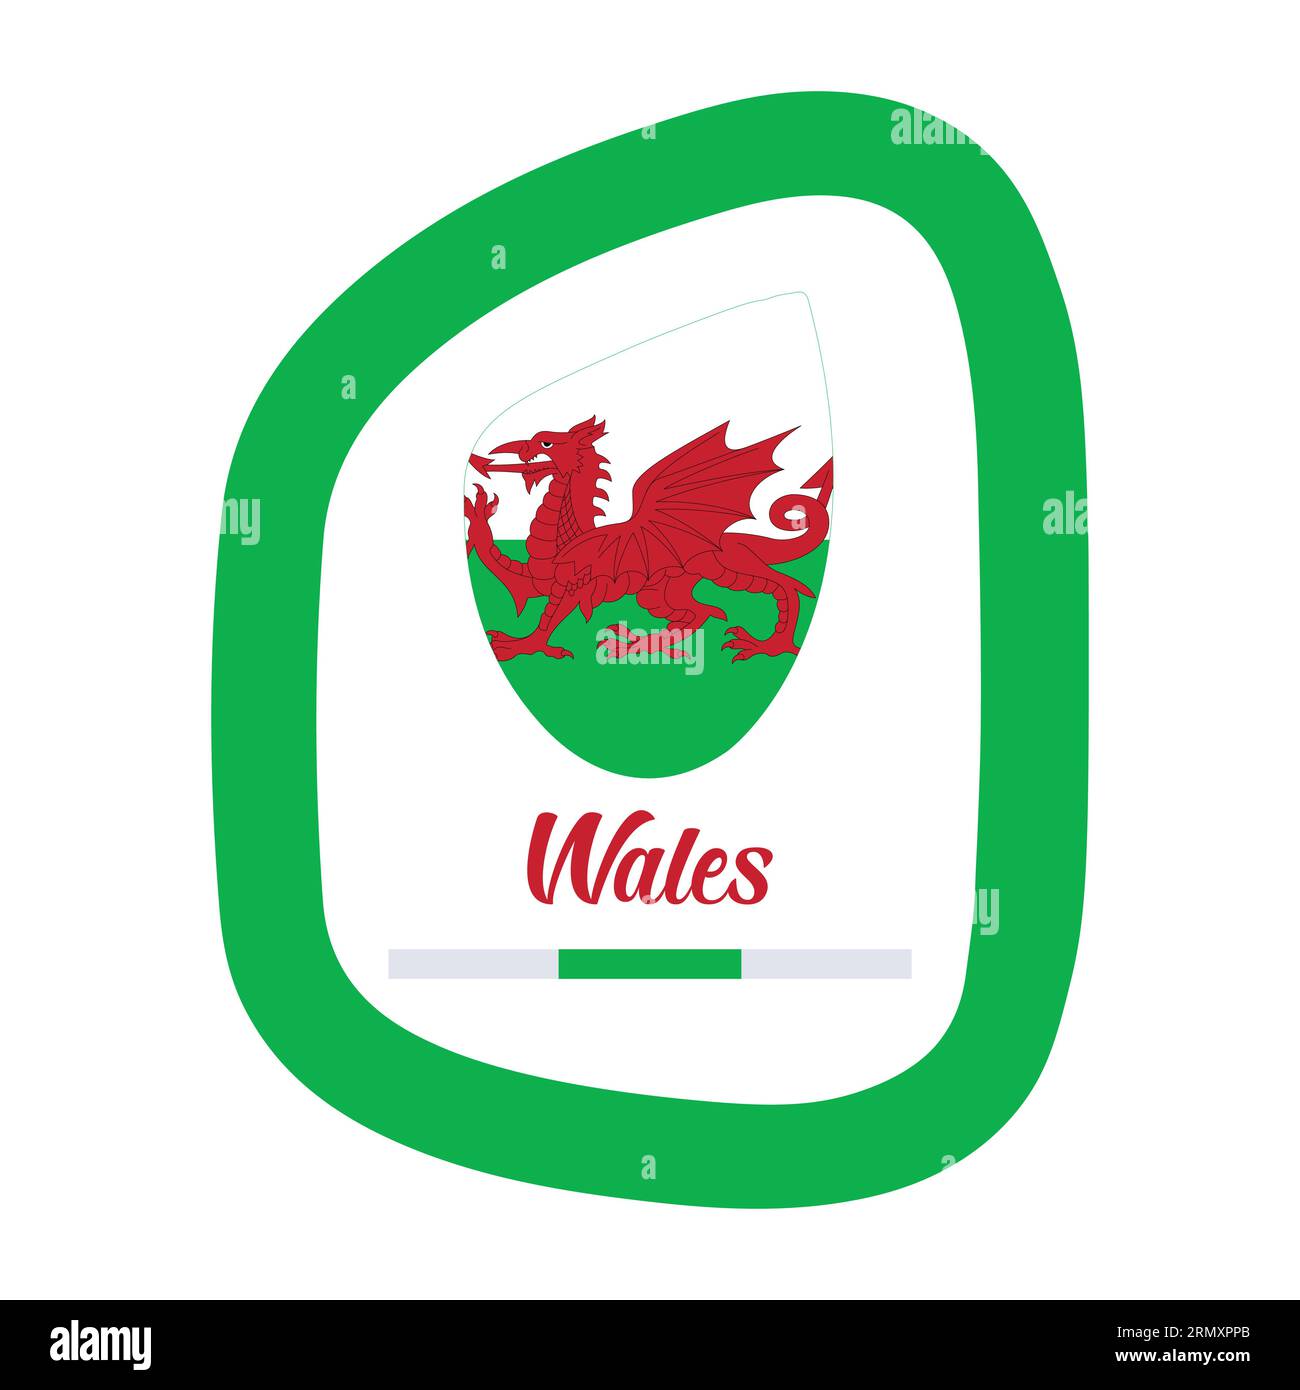 Wales-Flagge mit Rahmen Vektor-Illustration abstraktes editierbares Bild Stock Vektor